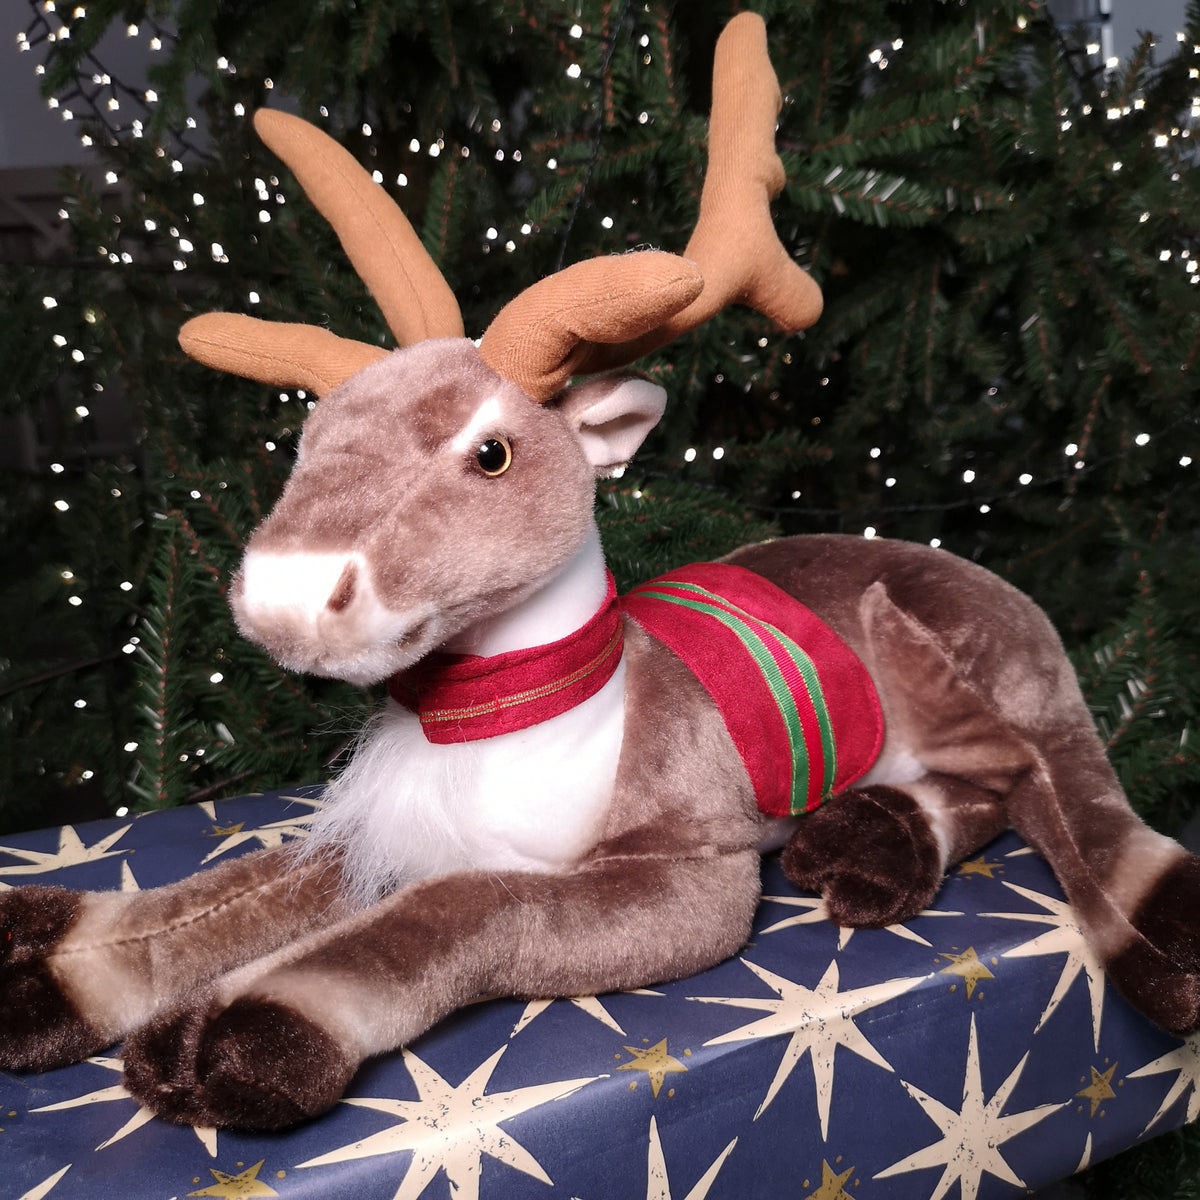 44cm Sitting Fabric Plush Reindeer / Stag Christmas Decoration / Ornament